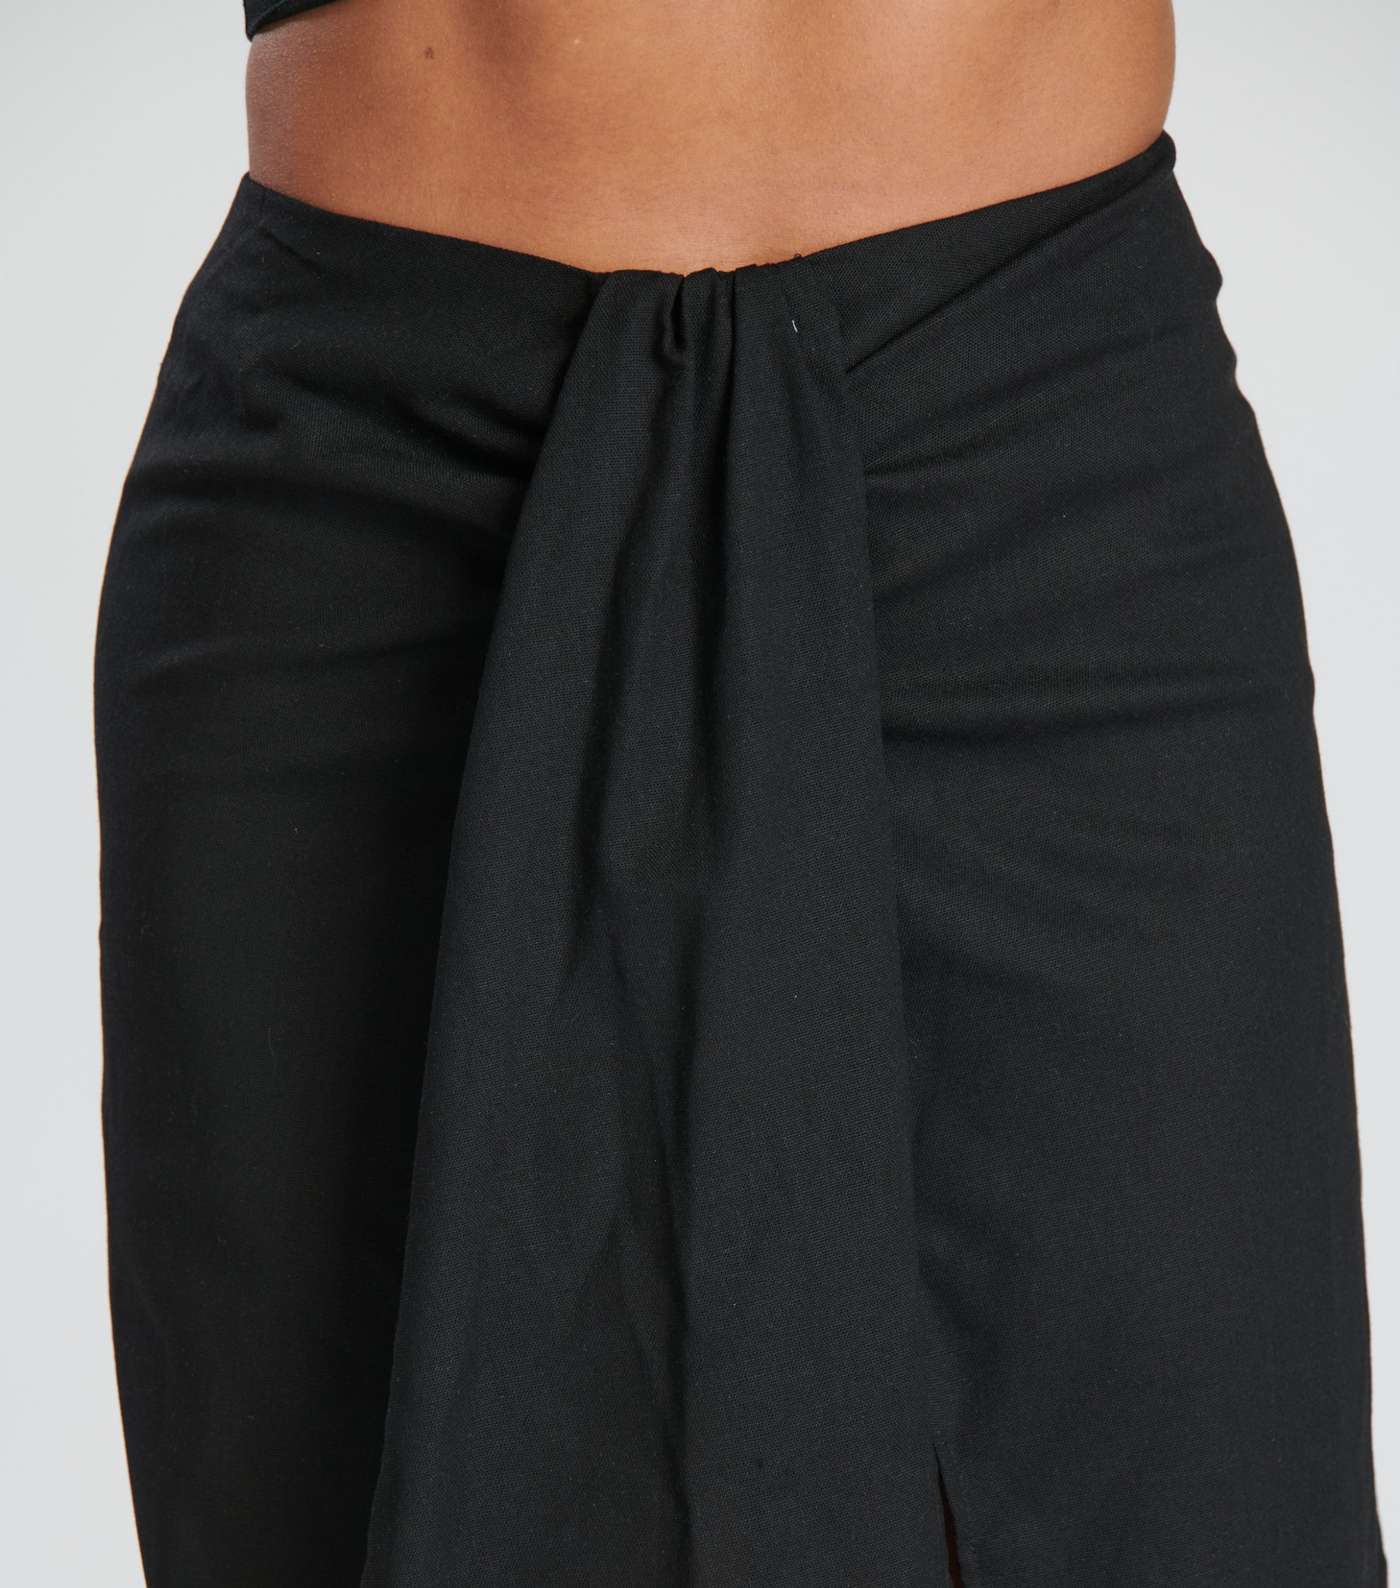 South Beach Black Linen-Look Knot Midi Skirt Image 4